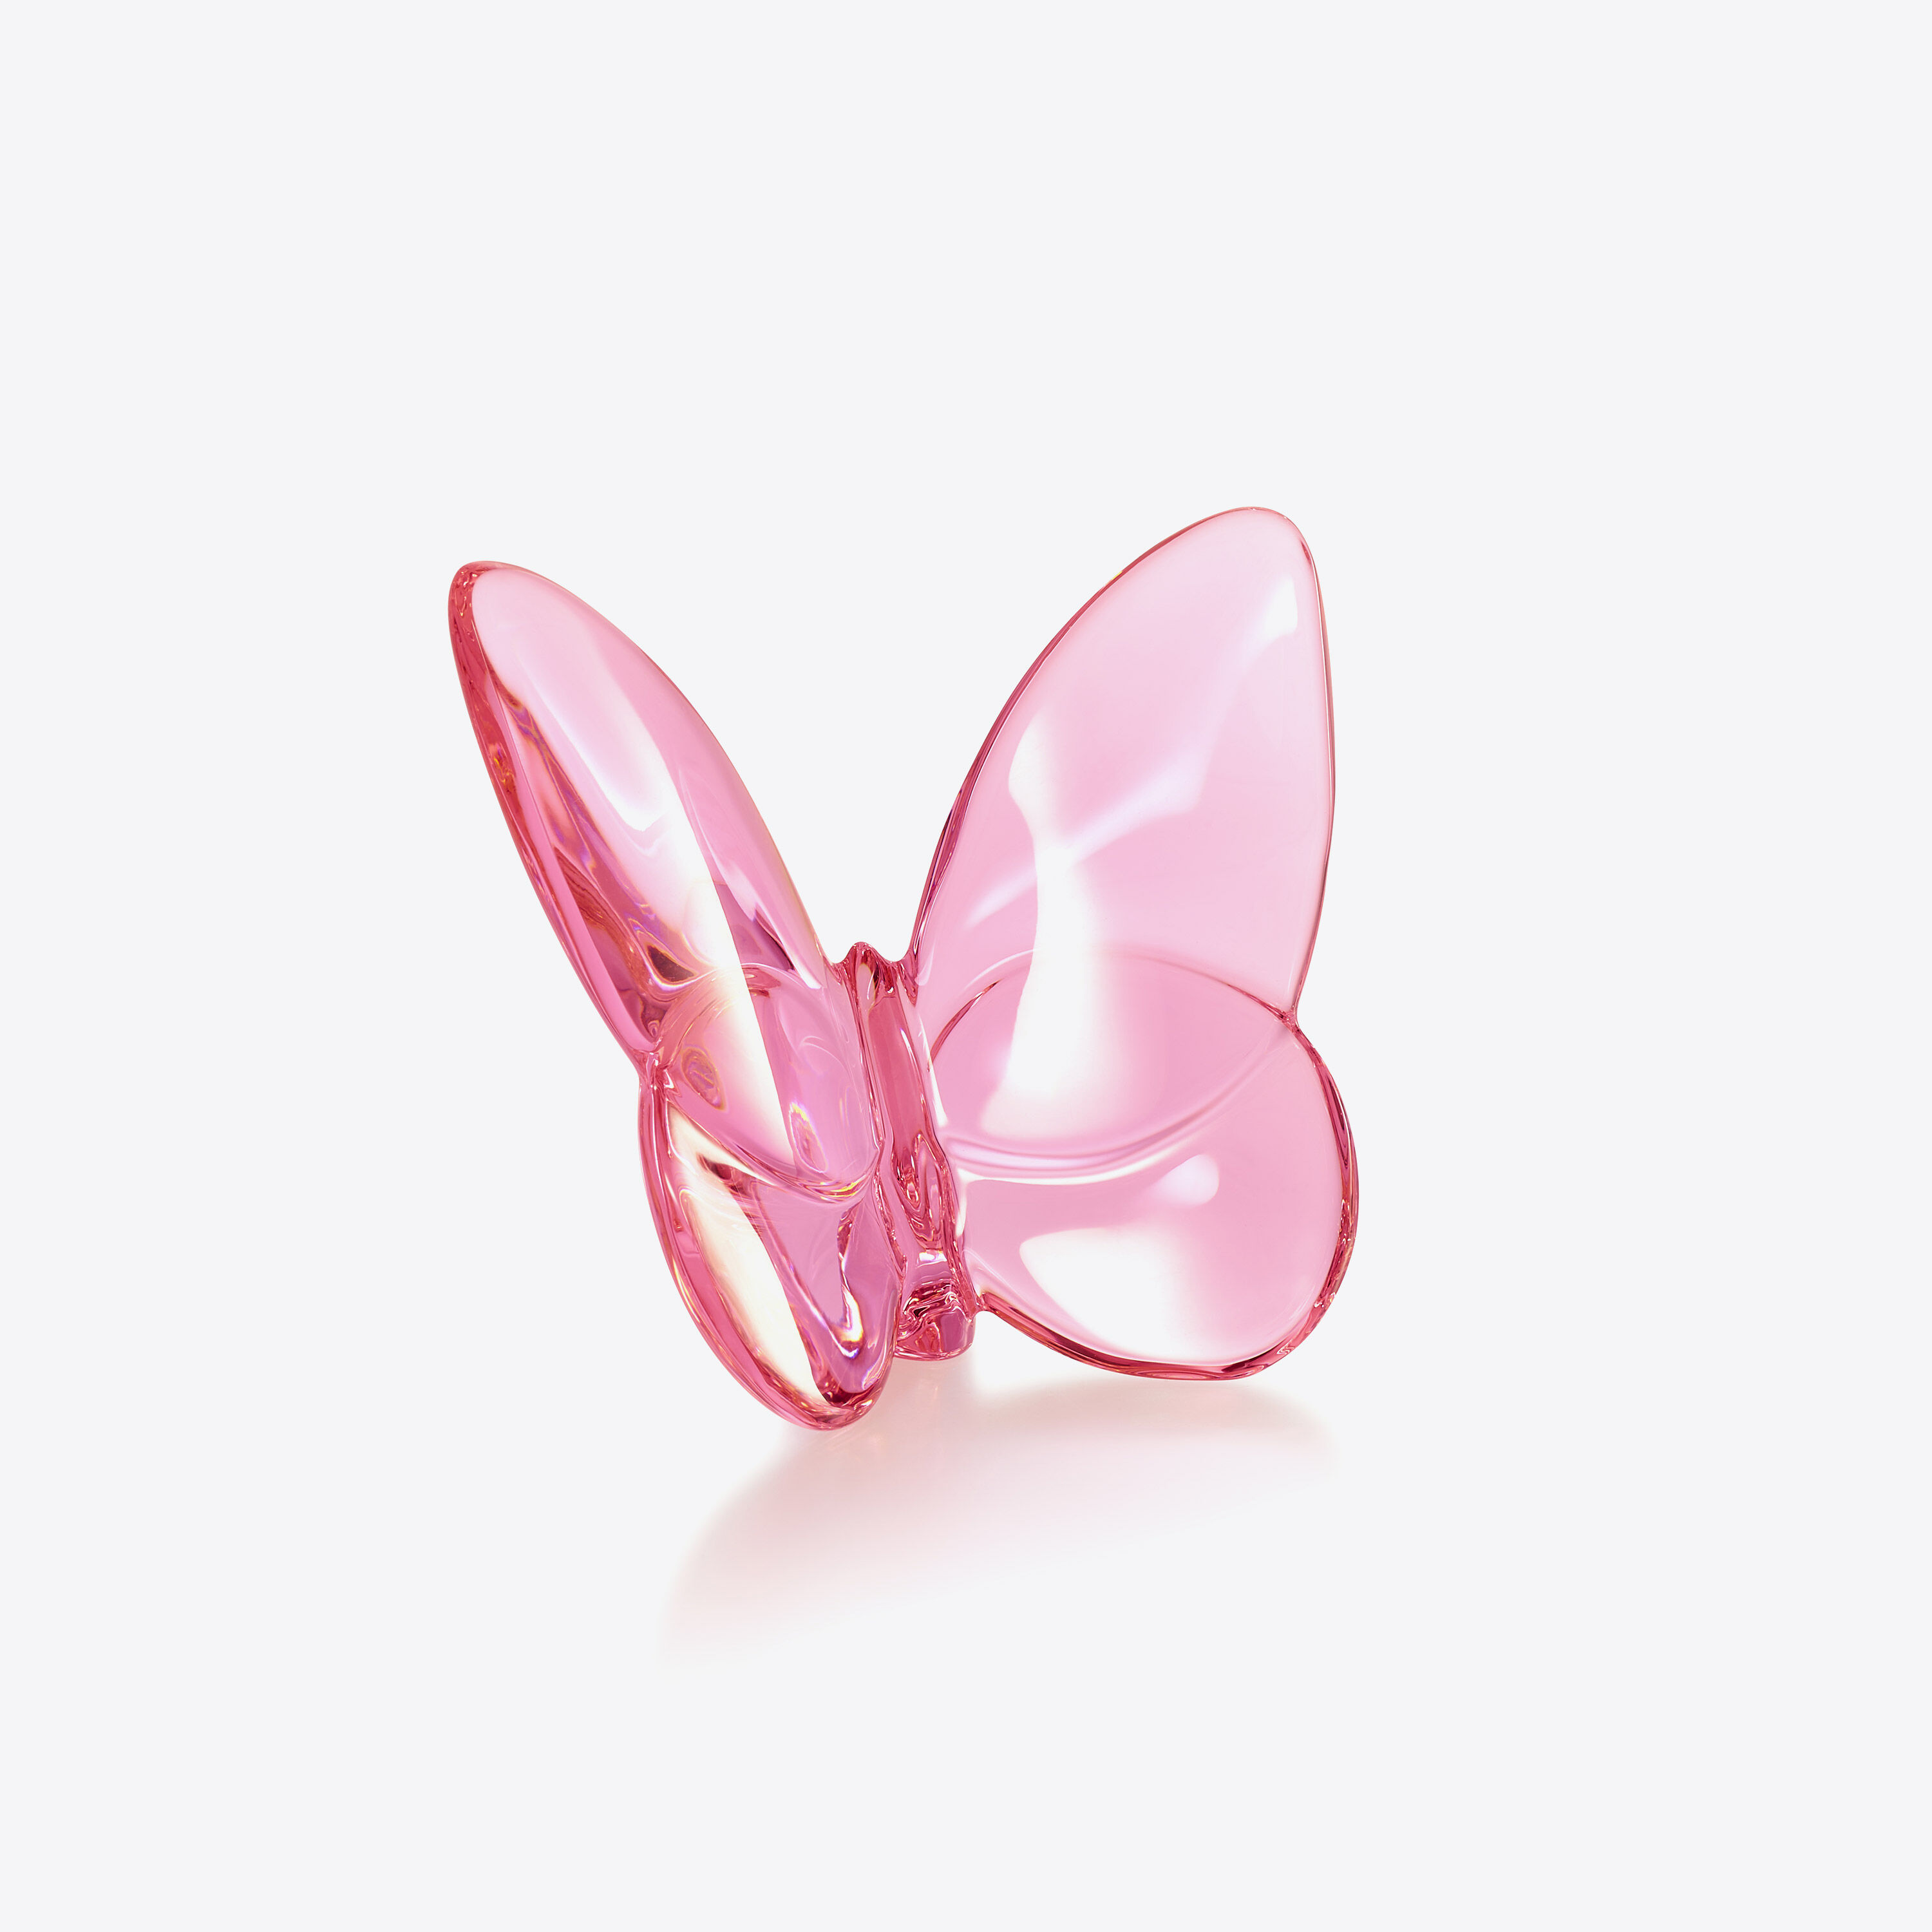 MUG1018 Pink Butterfly Be Still - Lily's TV Items